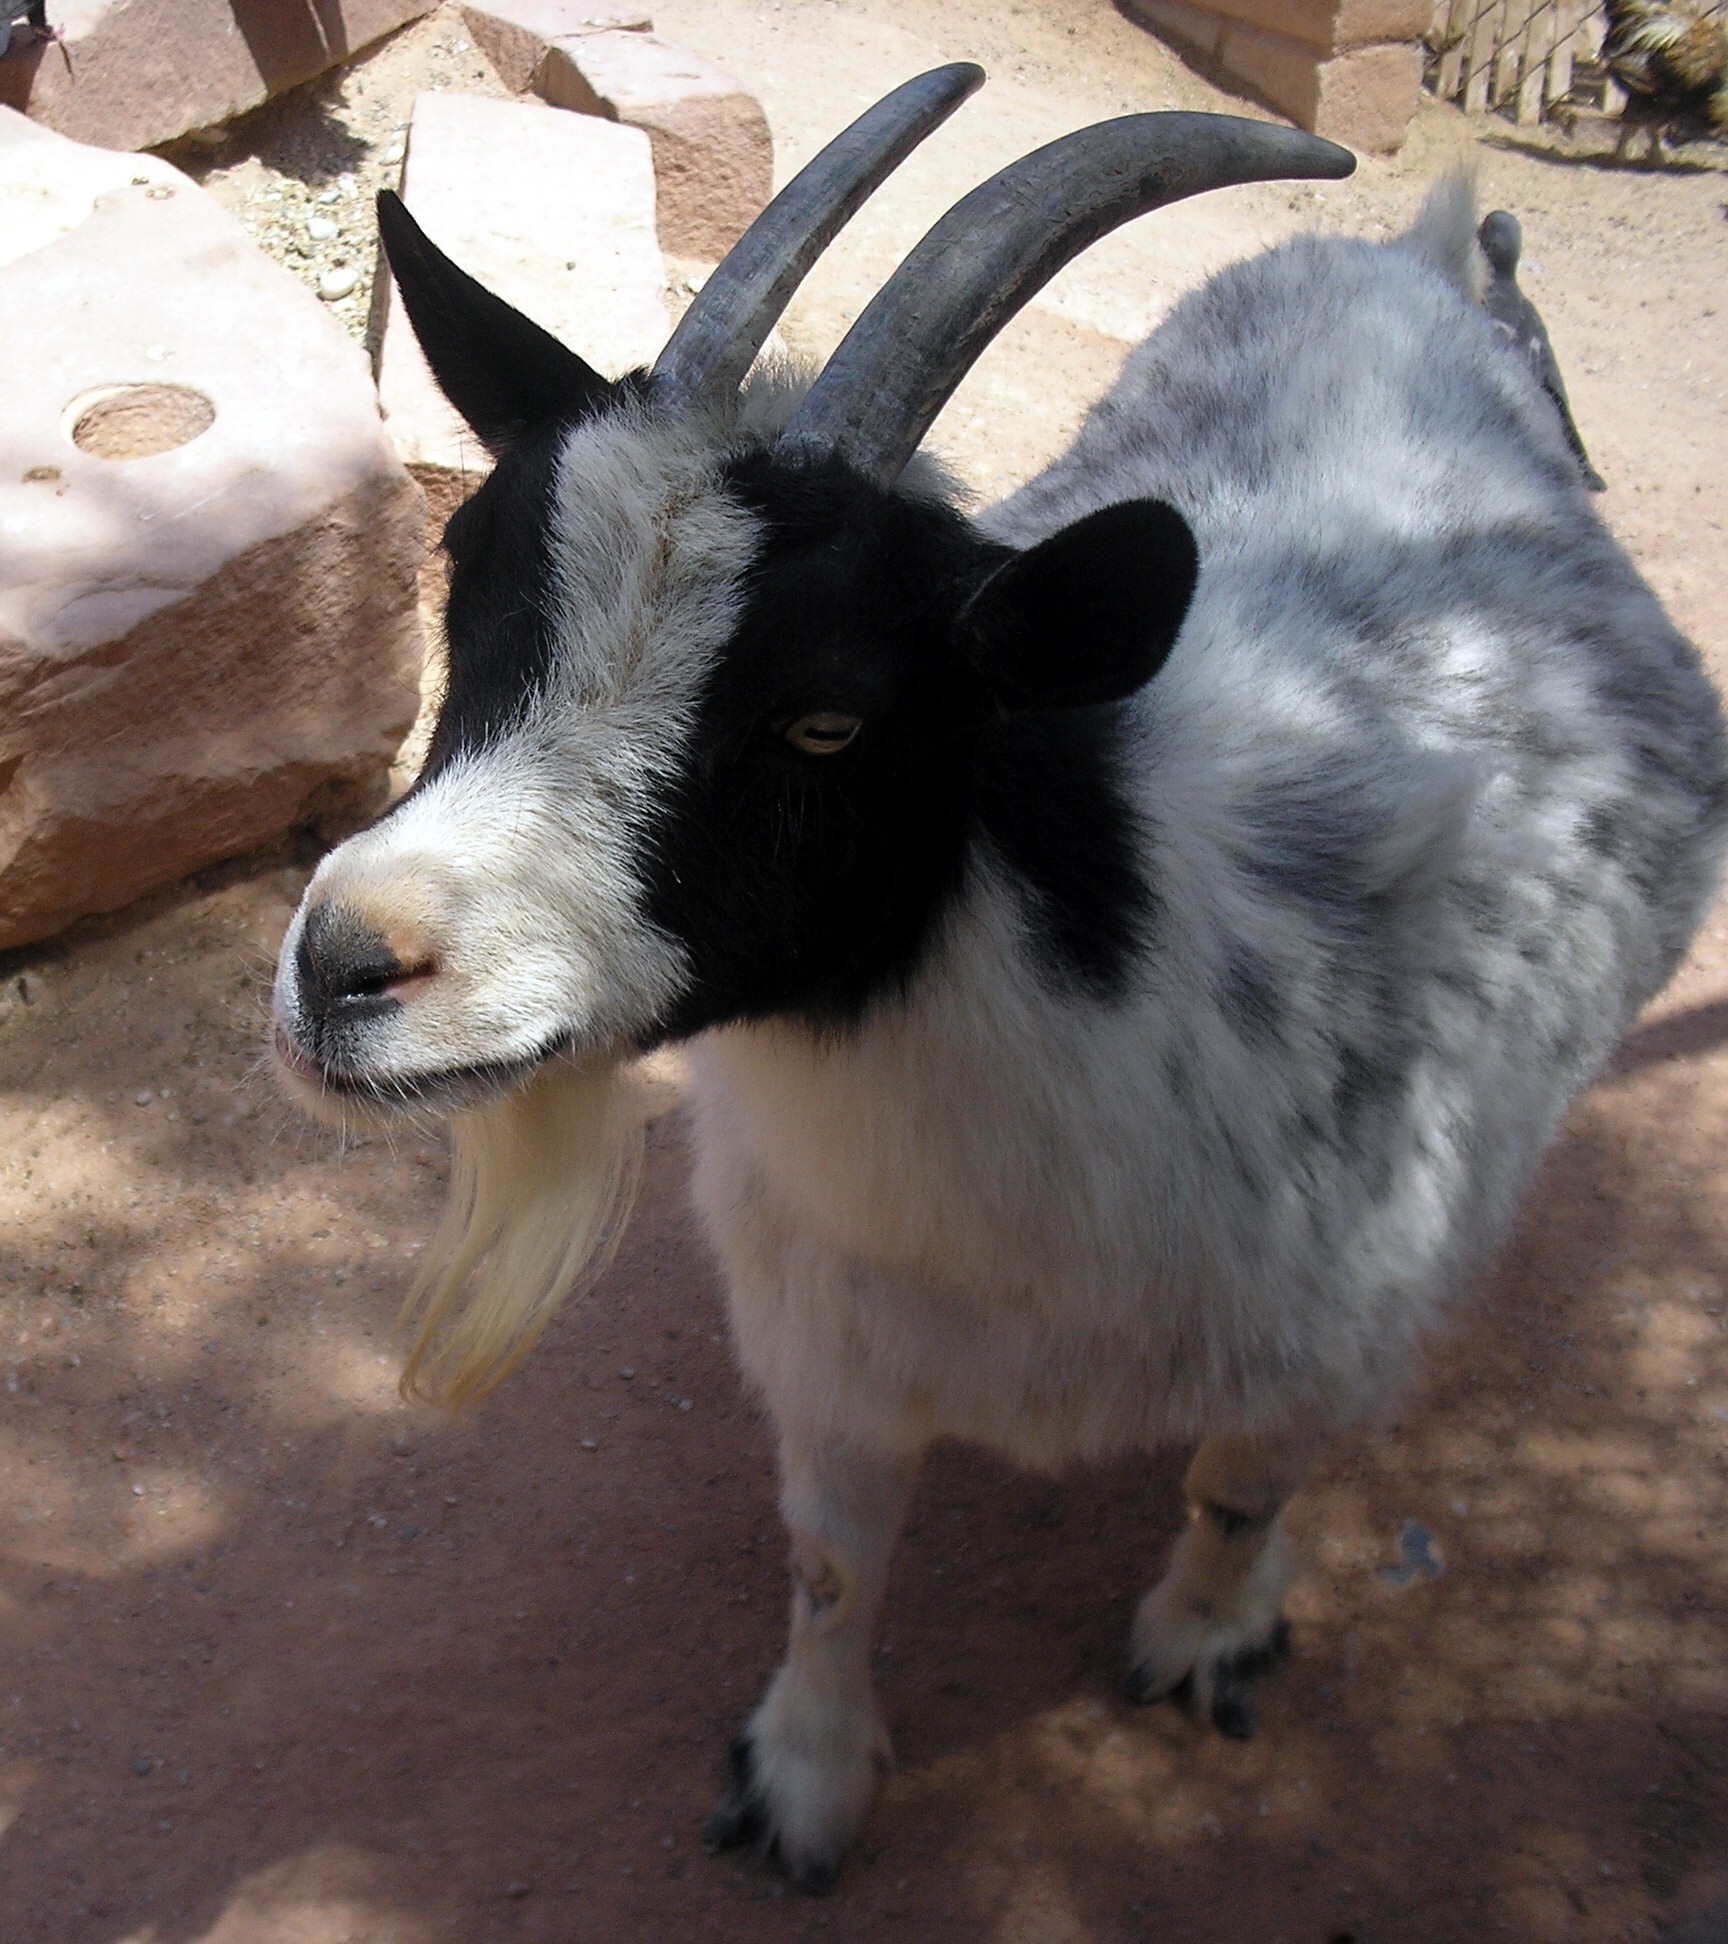 where did pygmy goats originated?